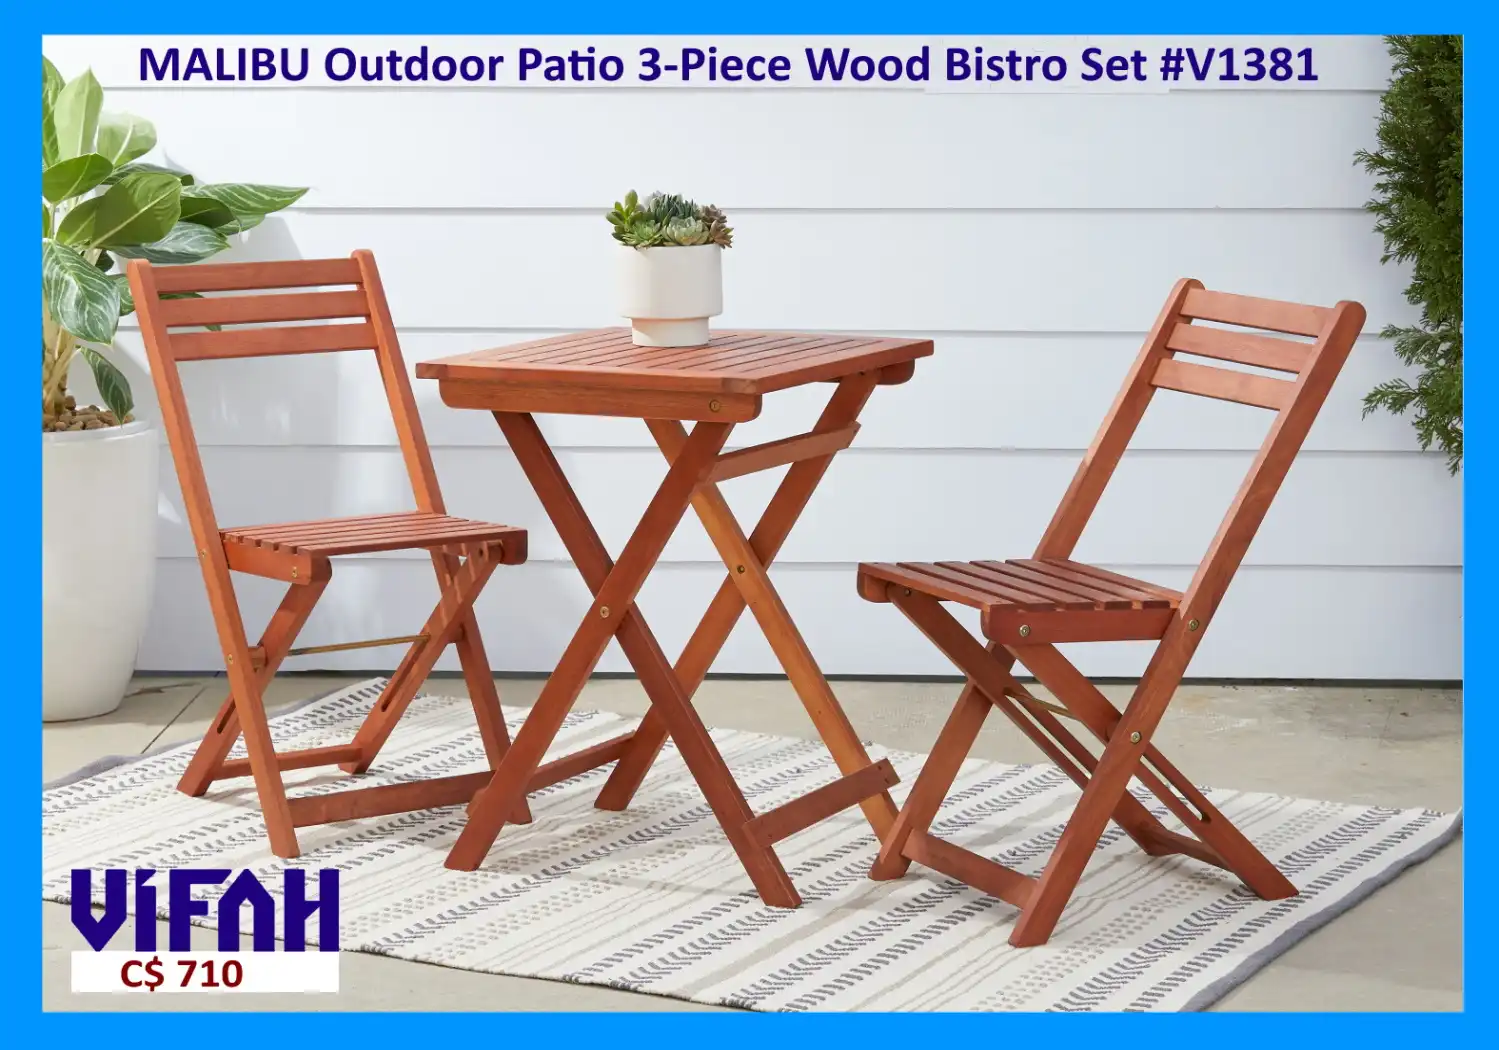 MALIBU Outdoor #V1381 Patio 3-Piece Wood Bistro Set